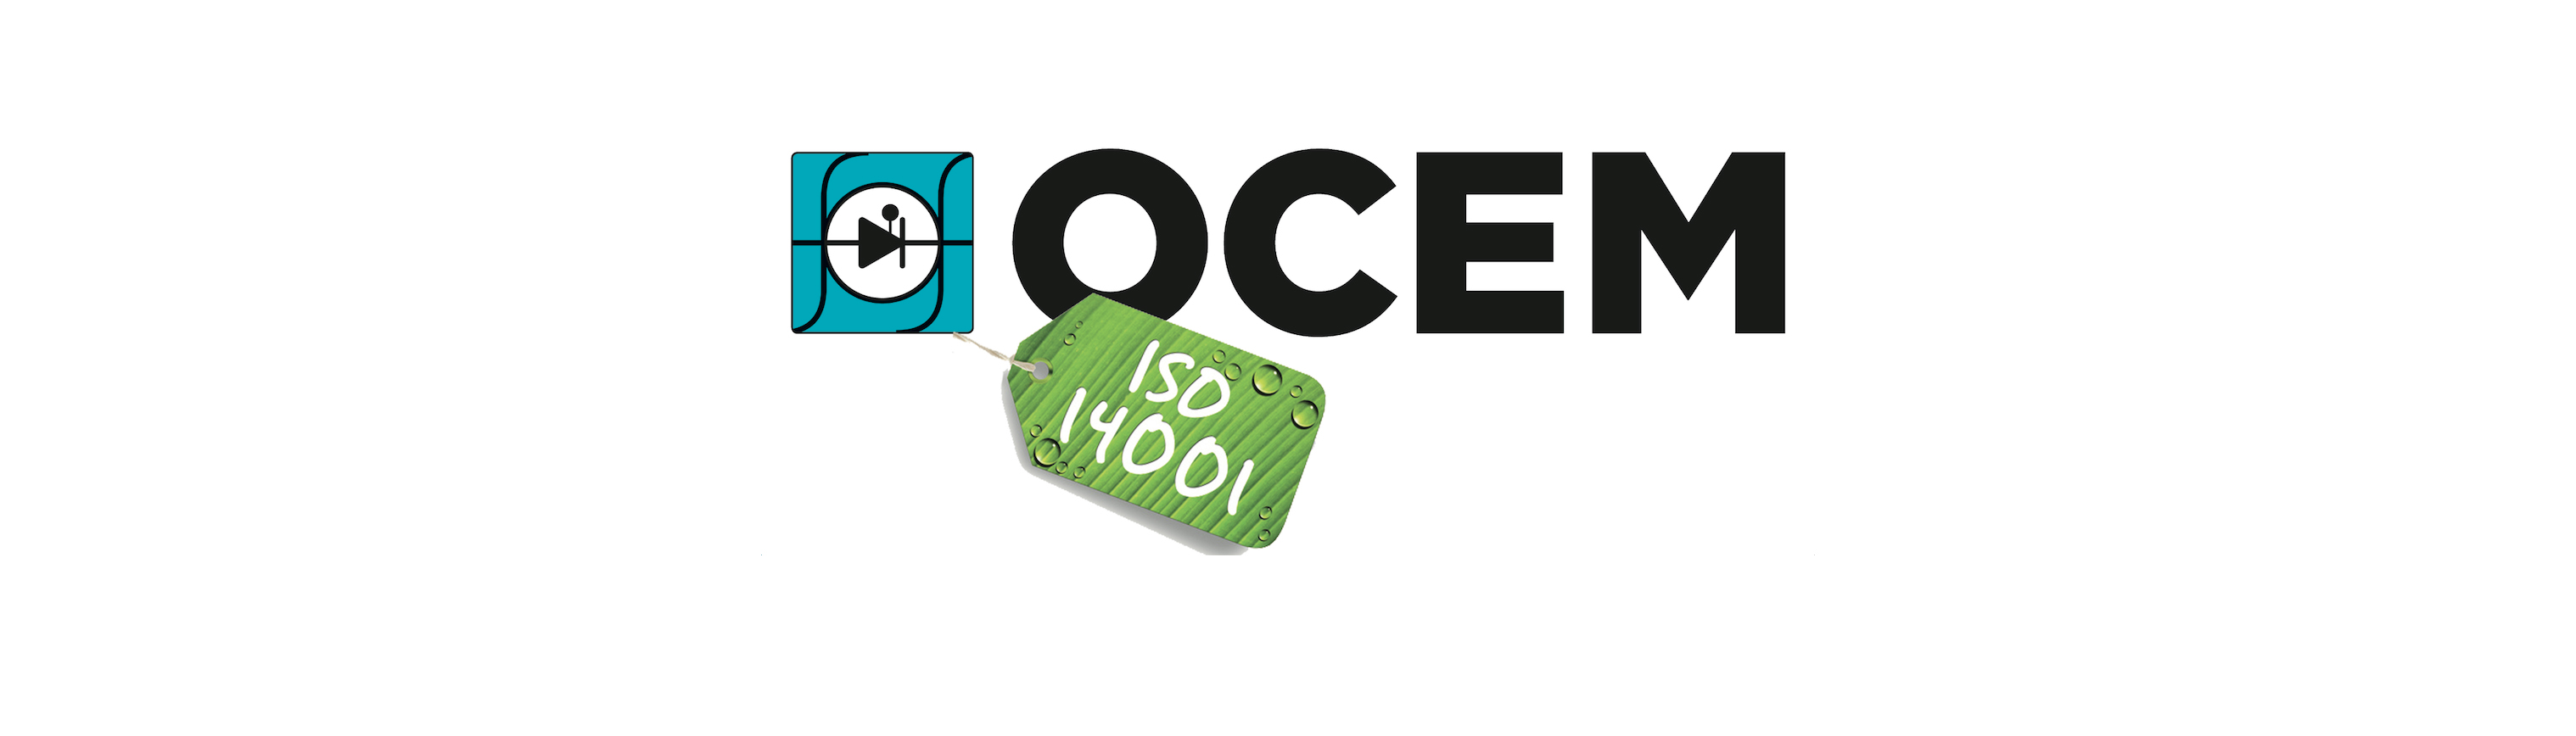 OCEM Power Electronics awarded ISO14001 Certification